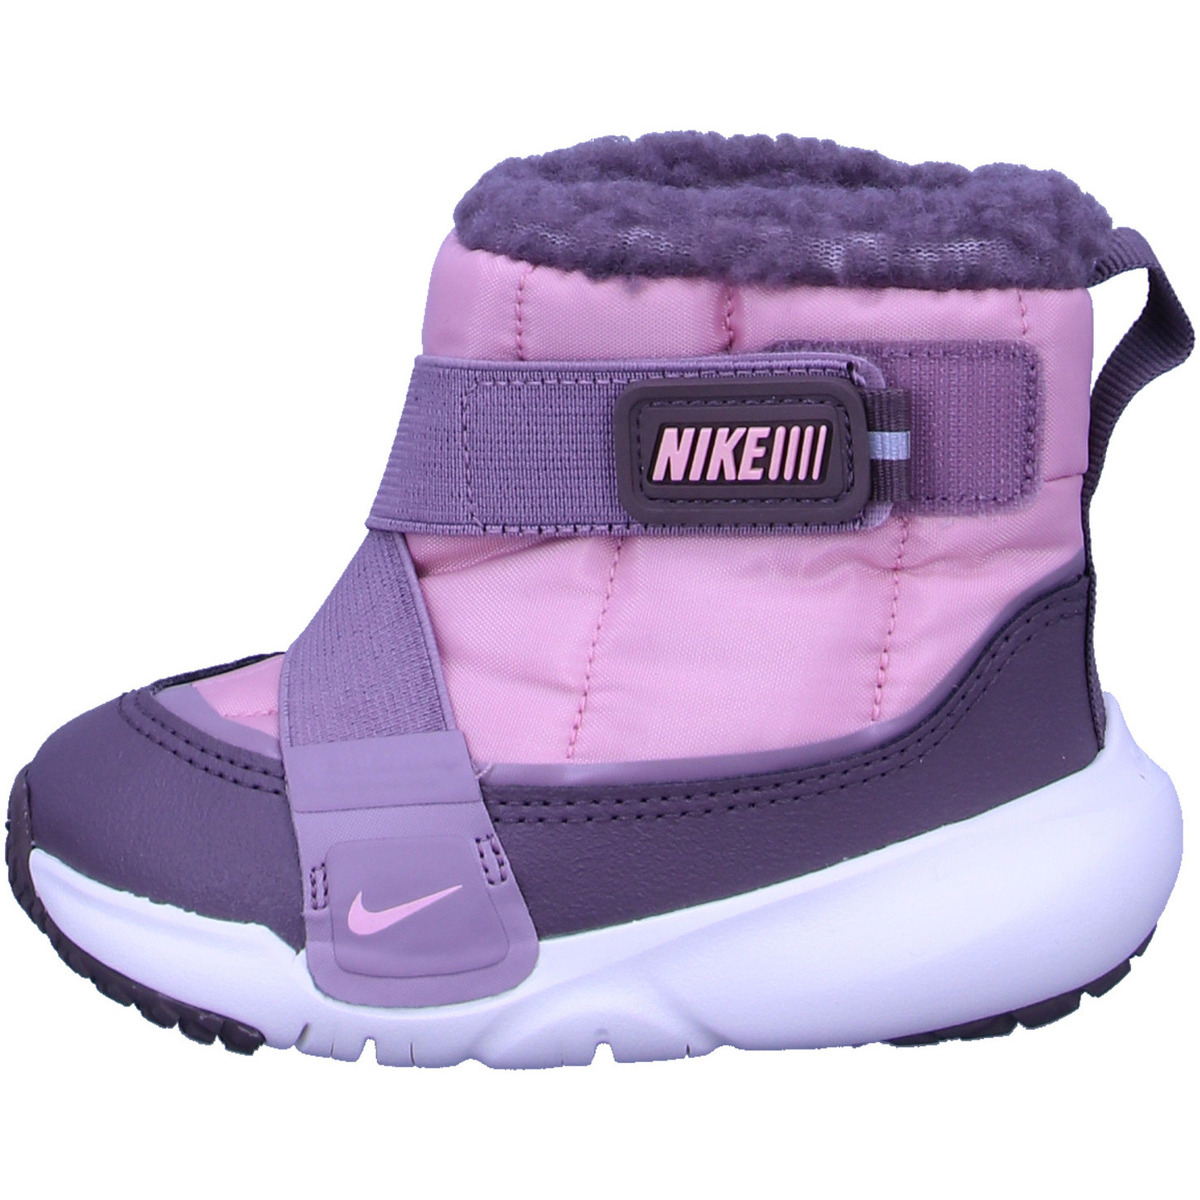 Nike Violet kZzXLa1J